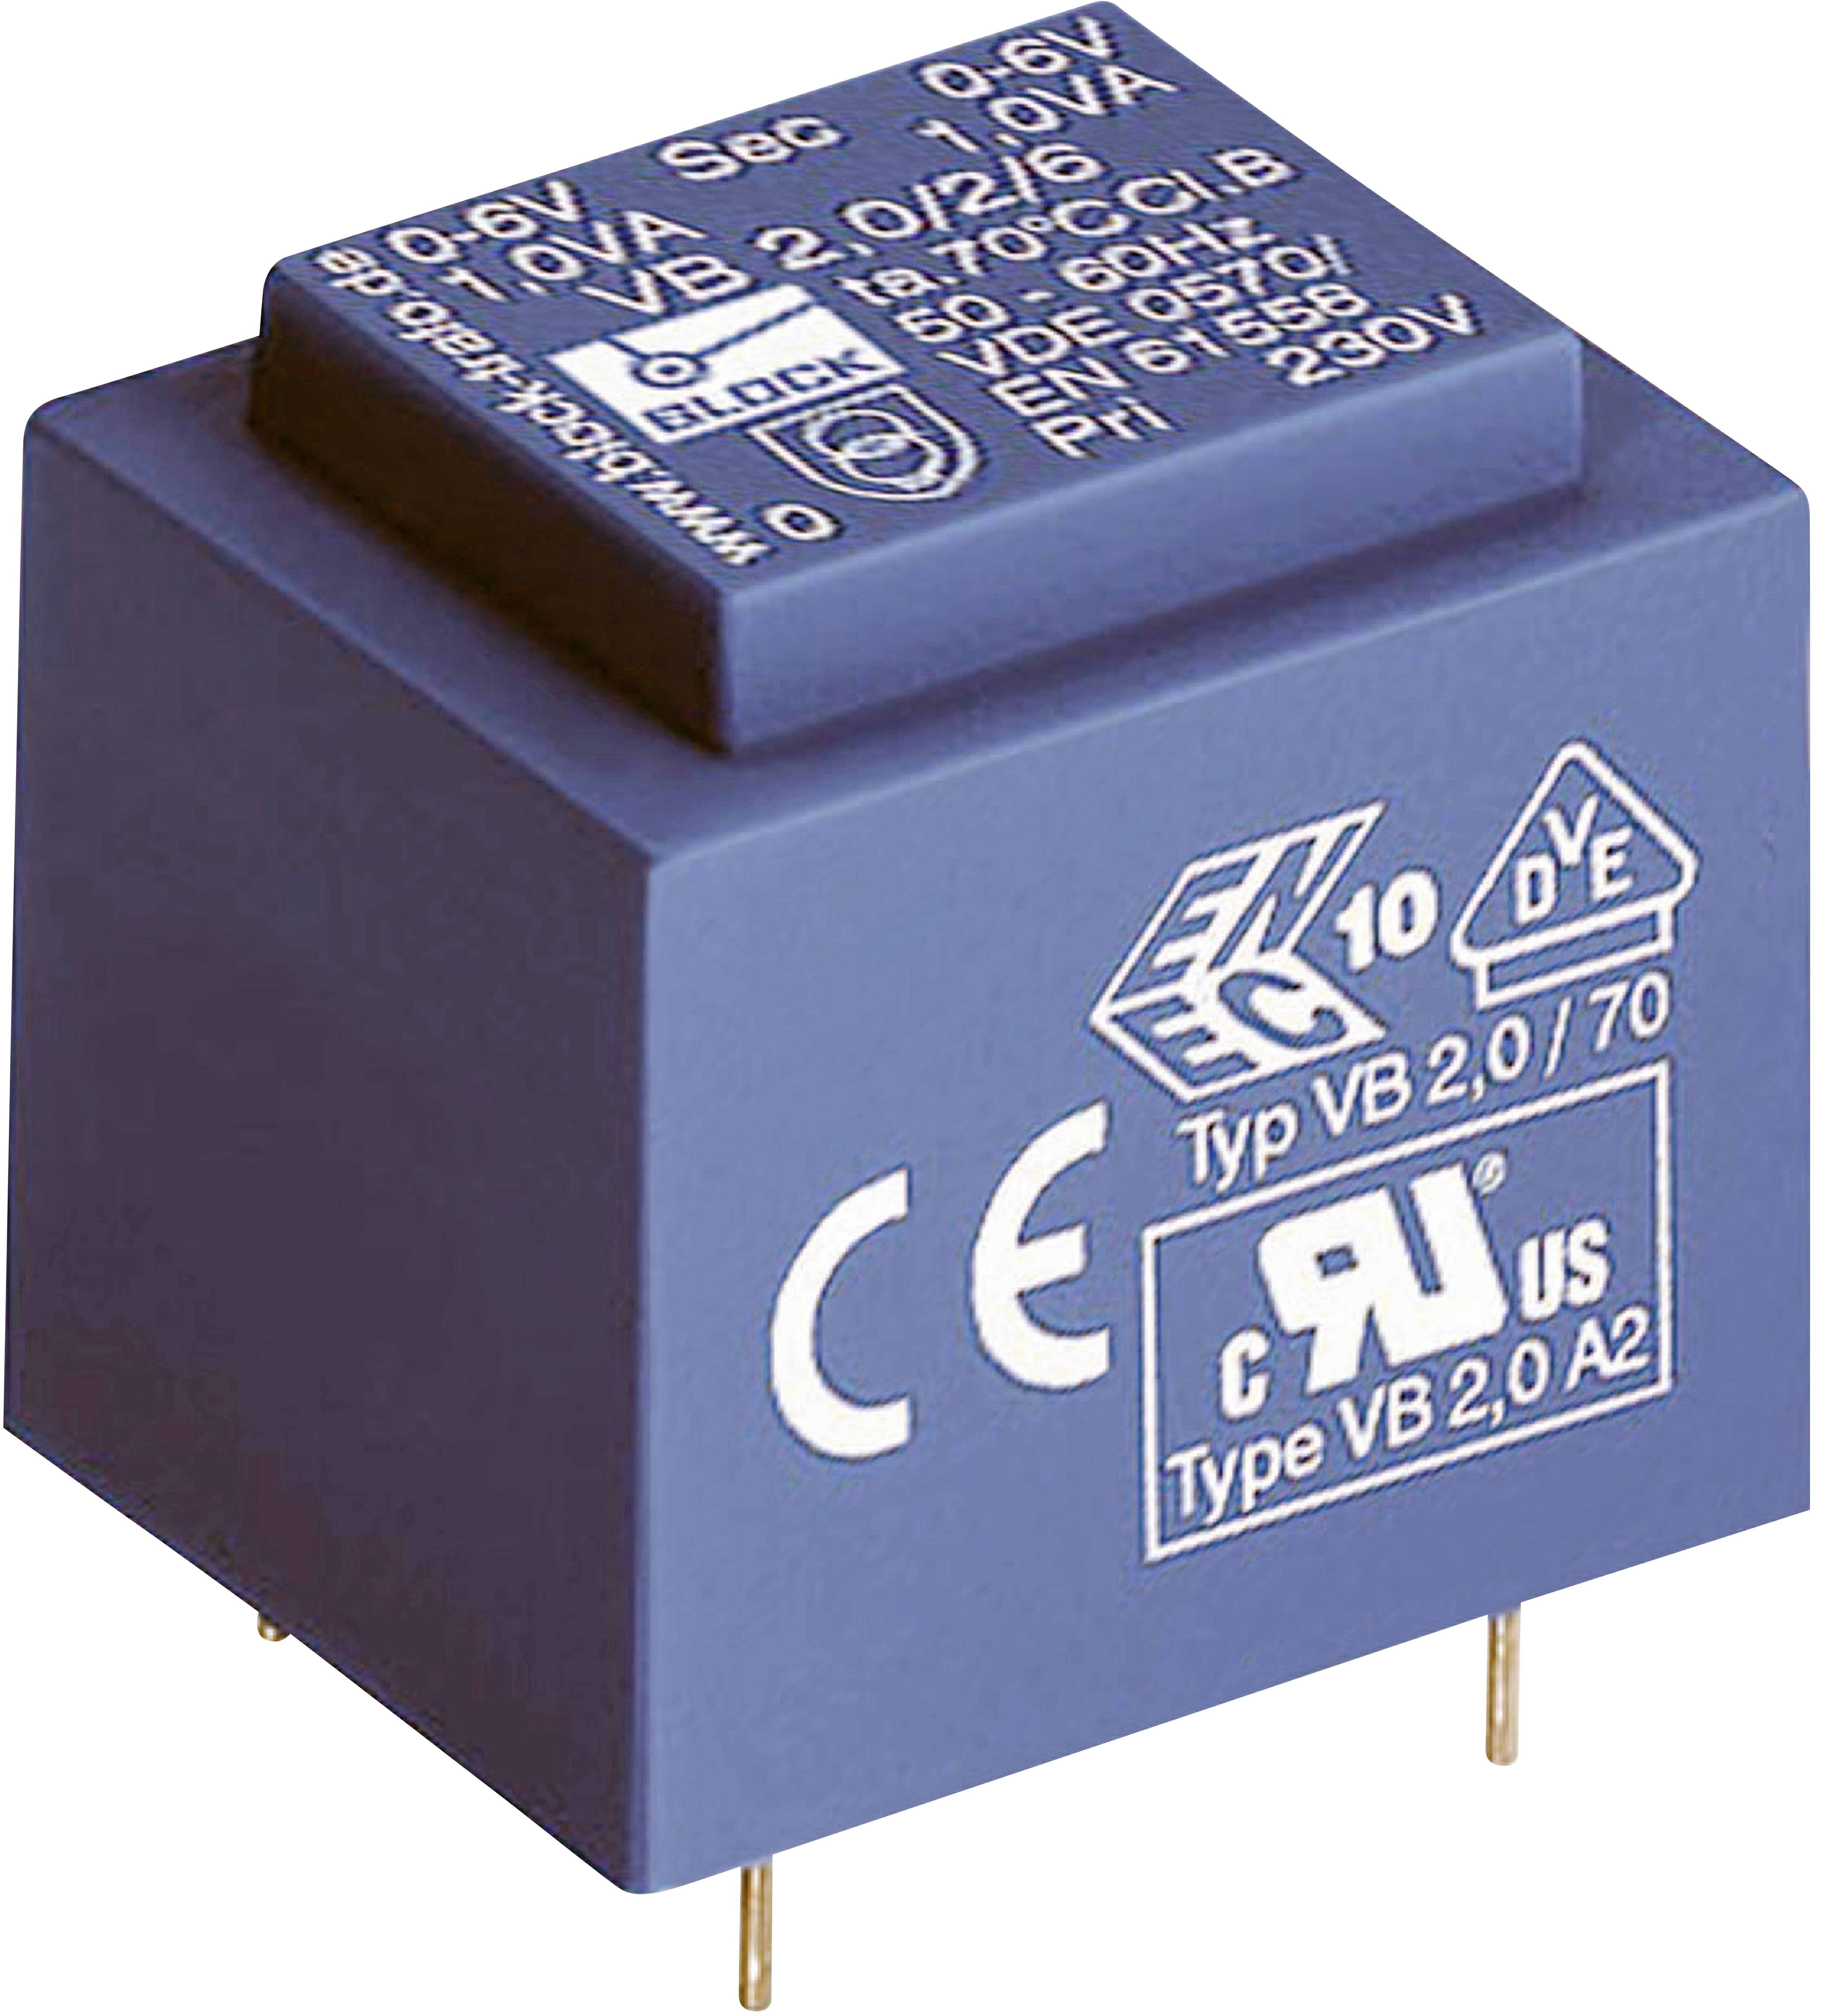 Block VB 2,3/1/9 Printtransformator 1 x 230V 1 x 9 V/AC 2.30 VA 255mA 